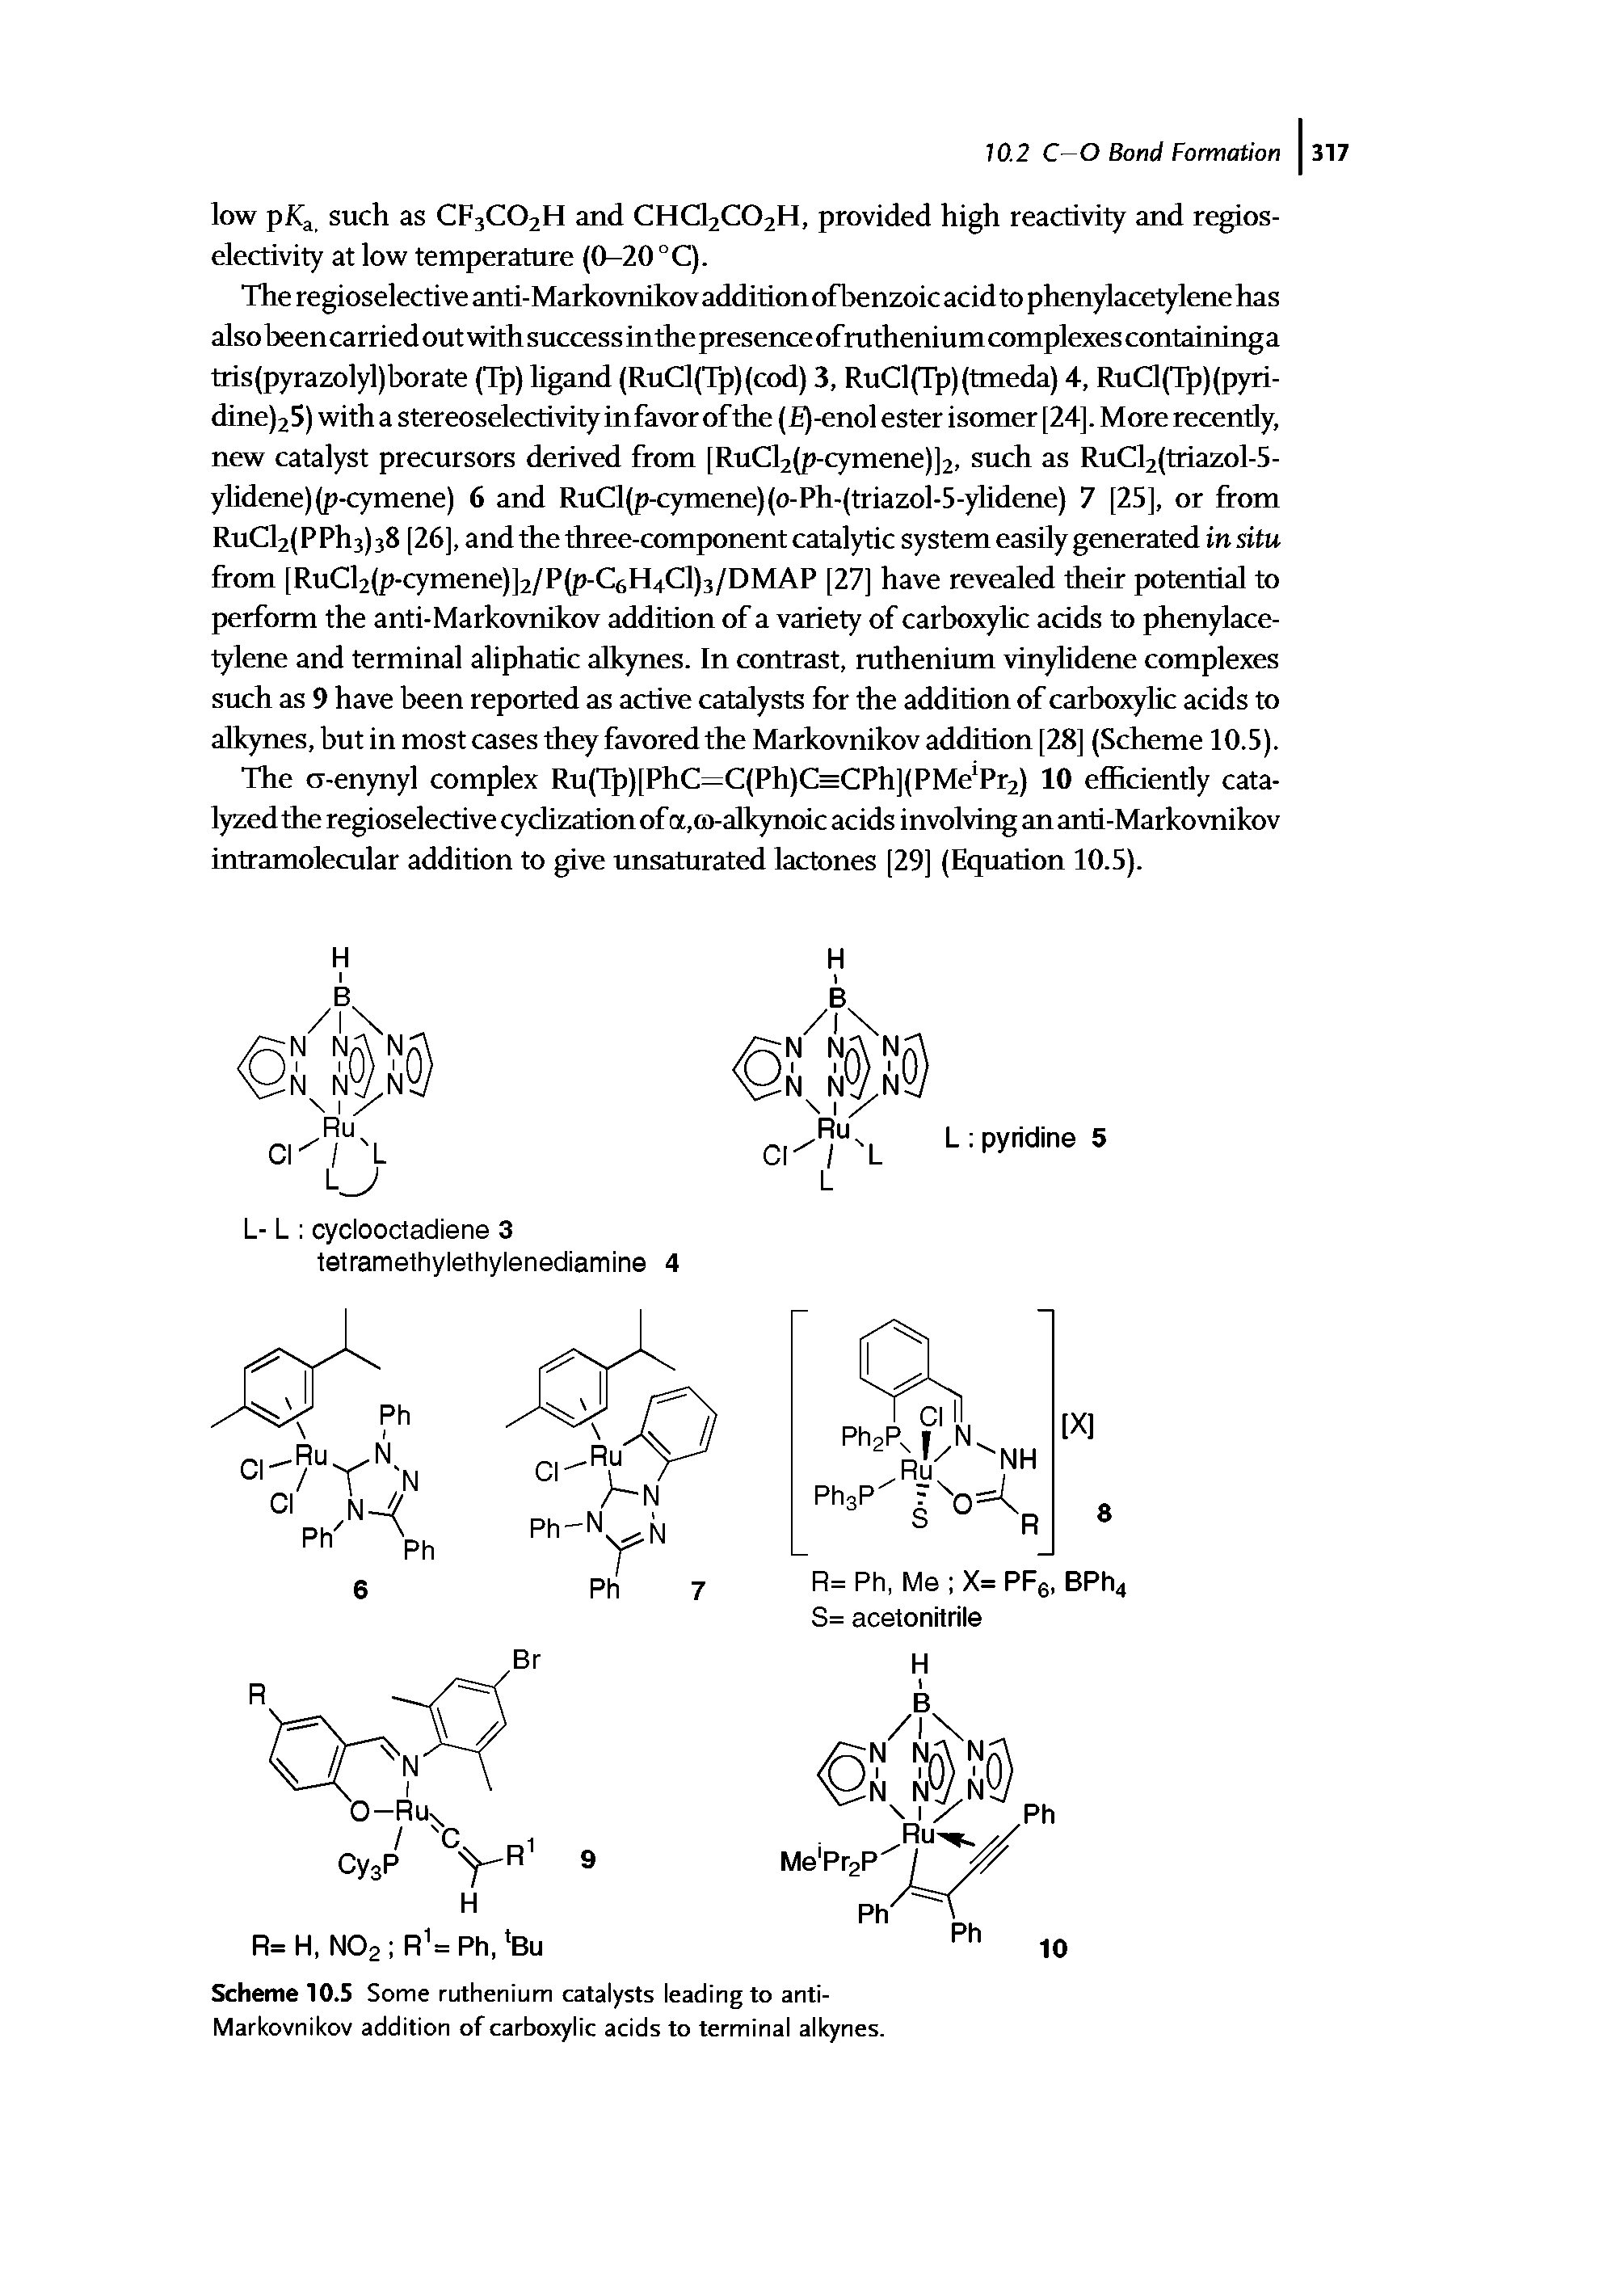 Scheme 10.5 Some ruthenium catalysts leading to anti-Markovnikov addition of carboxylic acids to terminal alkynes.